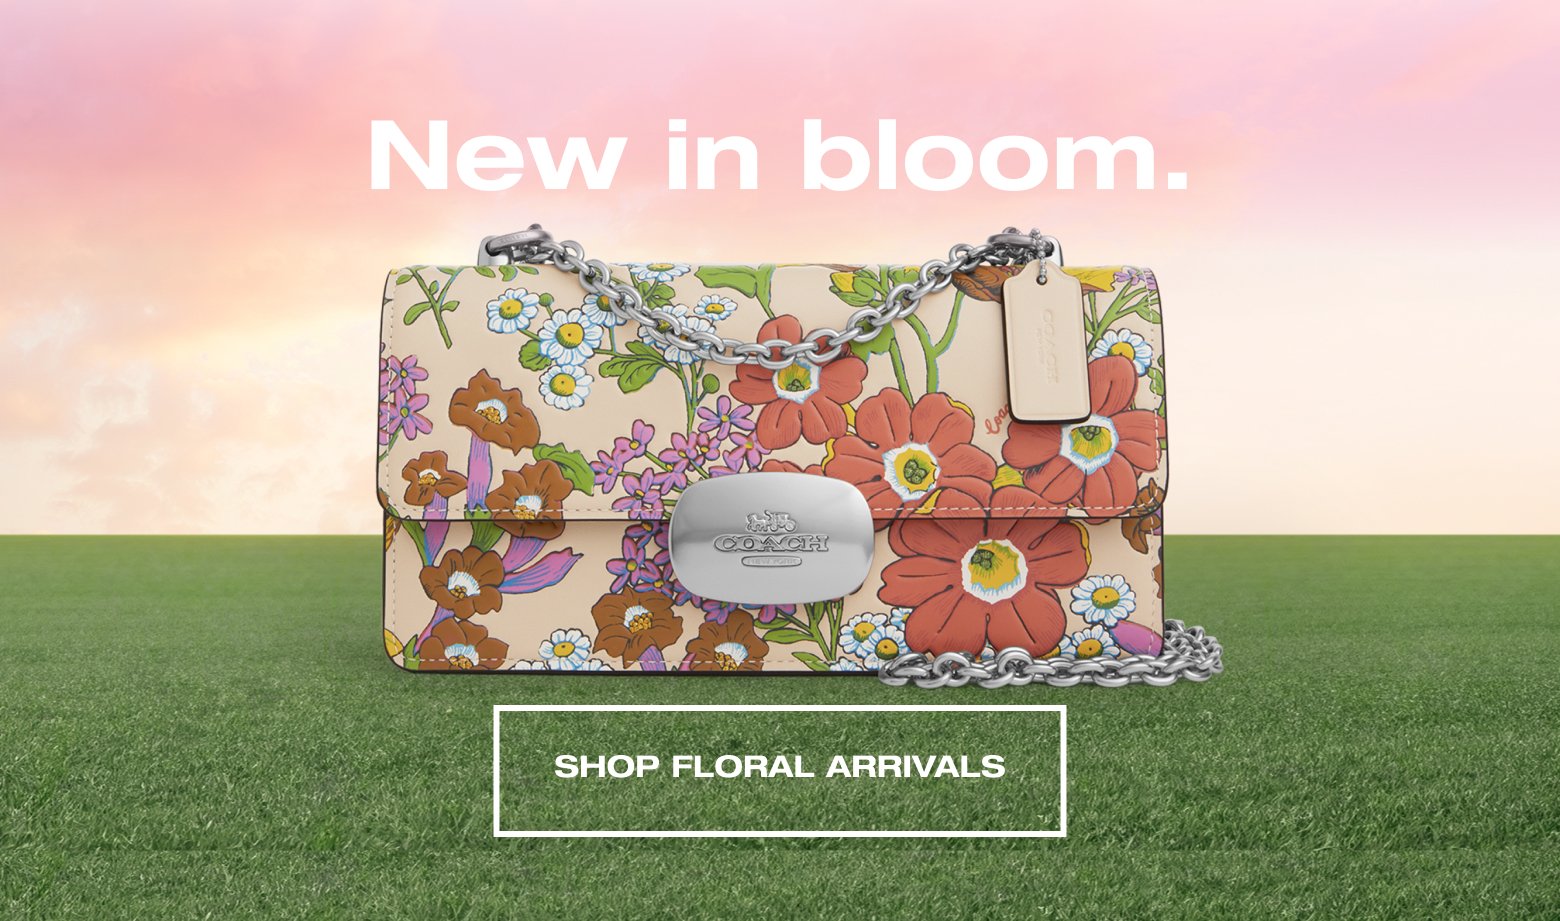 New in bloom. SHOP FLORAL ARRIVALS